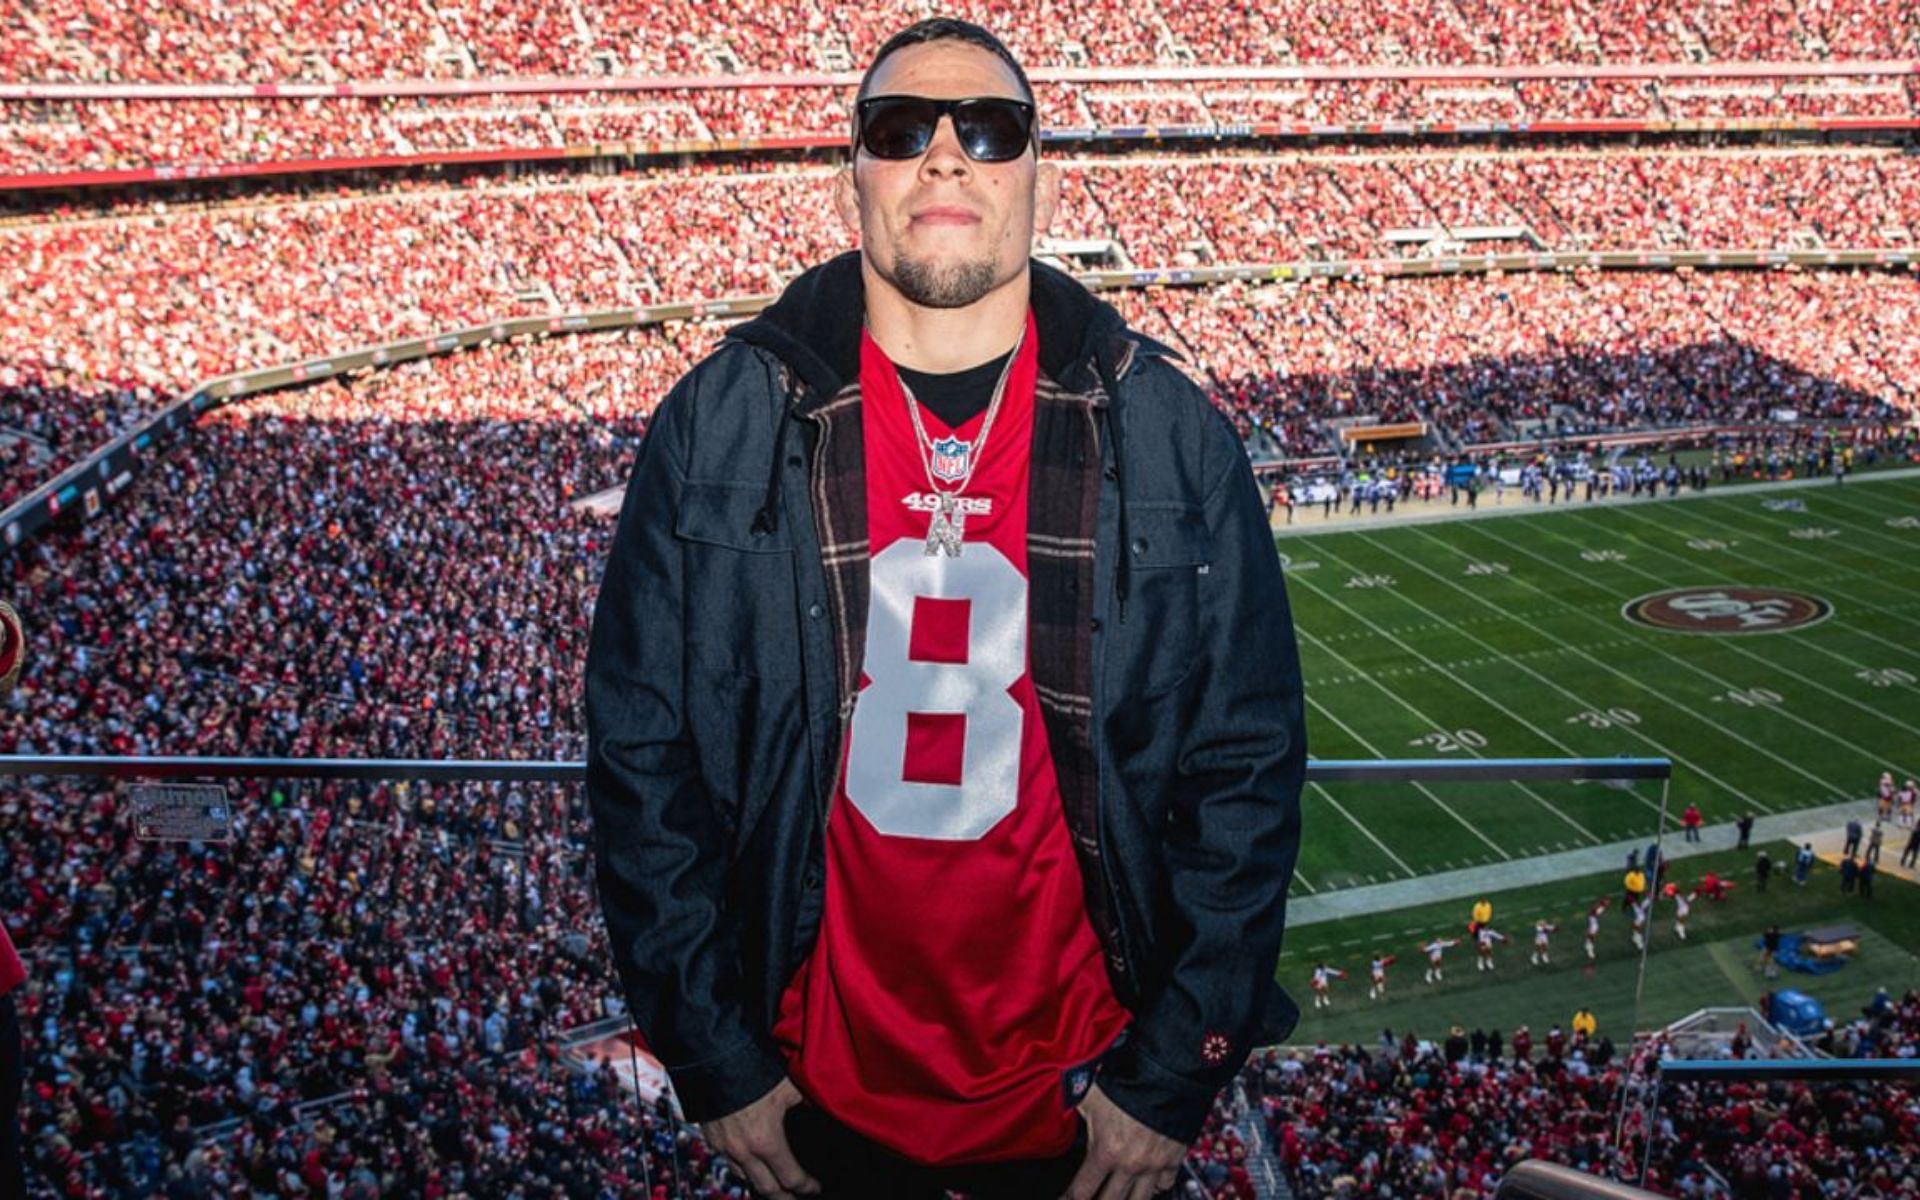 Nate Diaz [Image Courtesy: San Francisco 49ers official website]